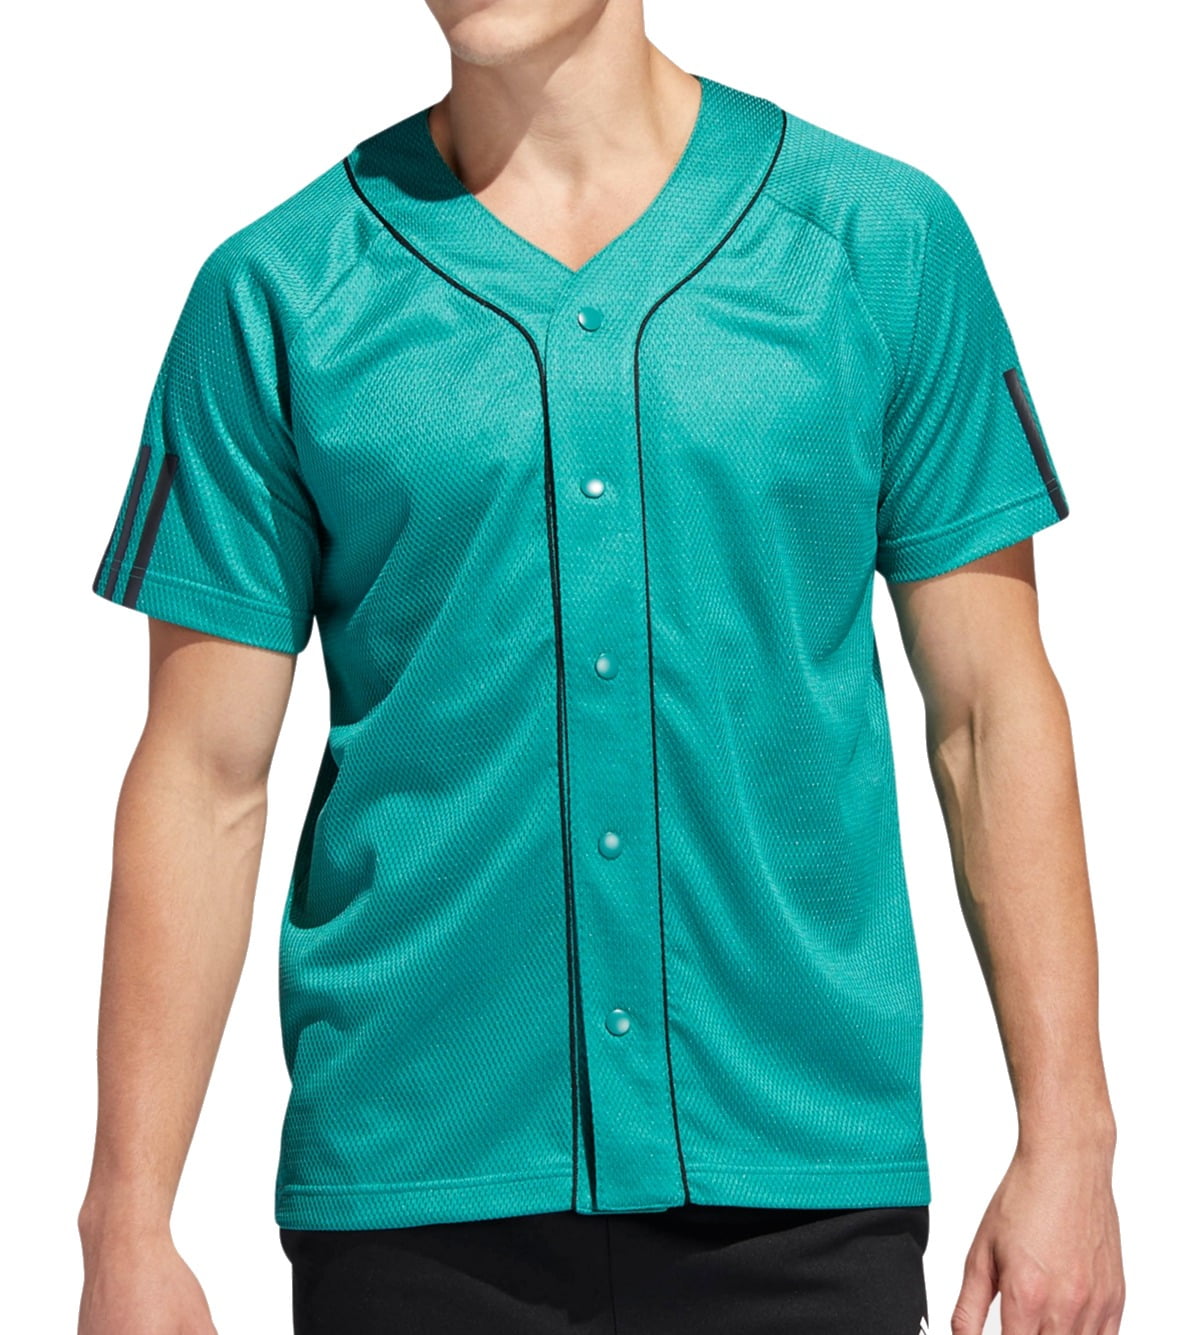 Adidas Casual Shirts - Mens Shirt Sport Mesh Baseball Jersey Button